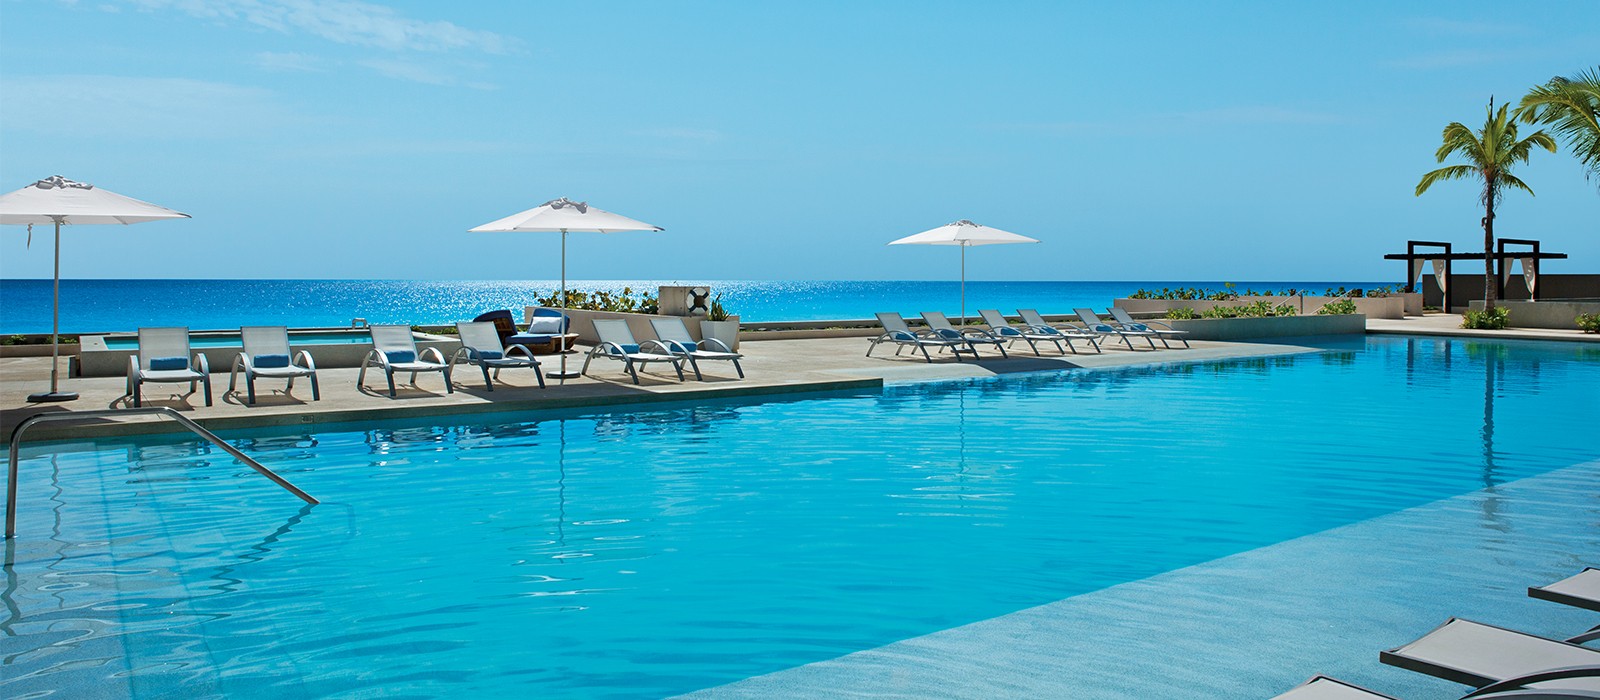 Mexico holidays - Secrets The Vine Cancun - Header